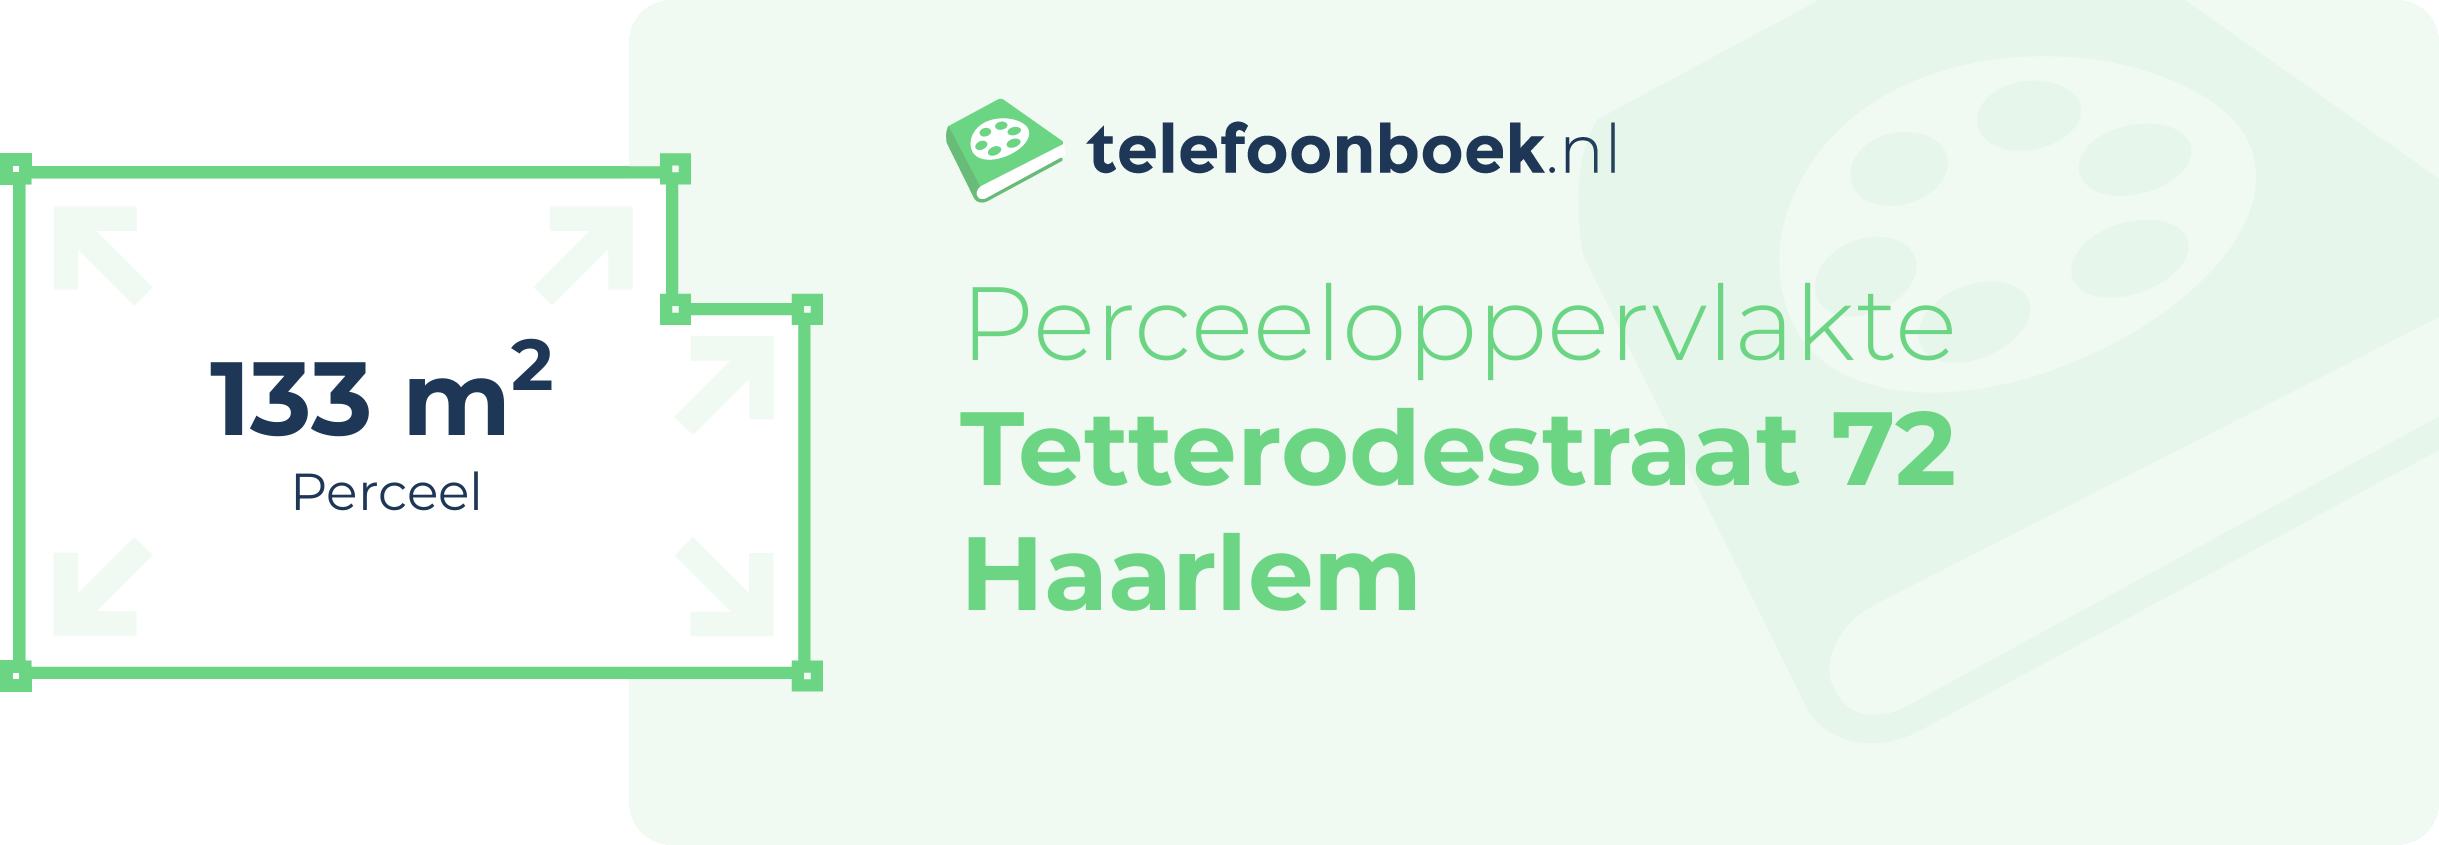 Perceeloppervlakte Tetterodestraat 72 Haarlem